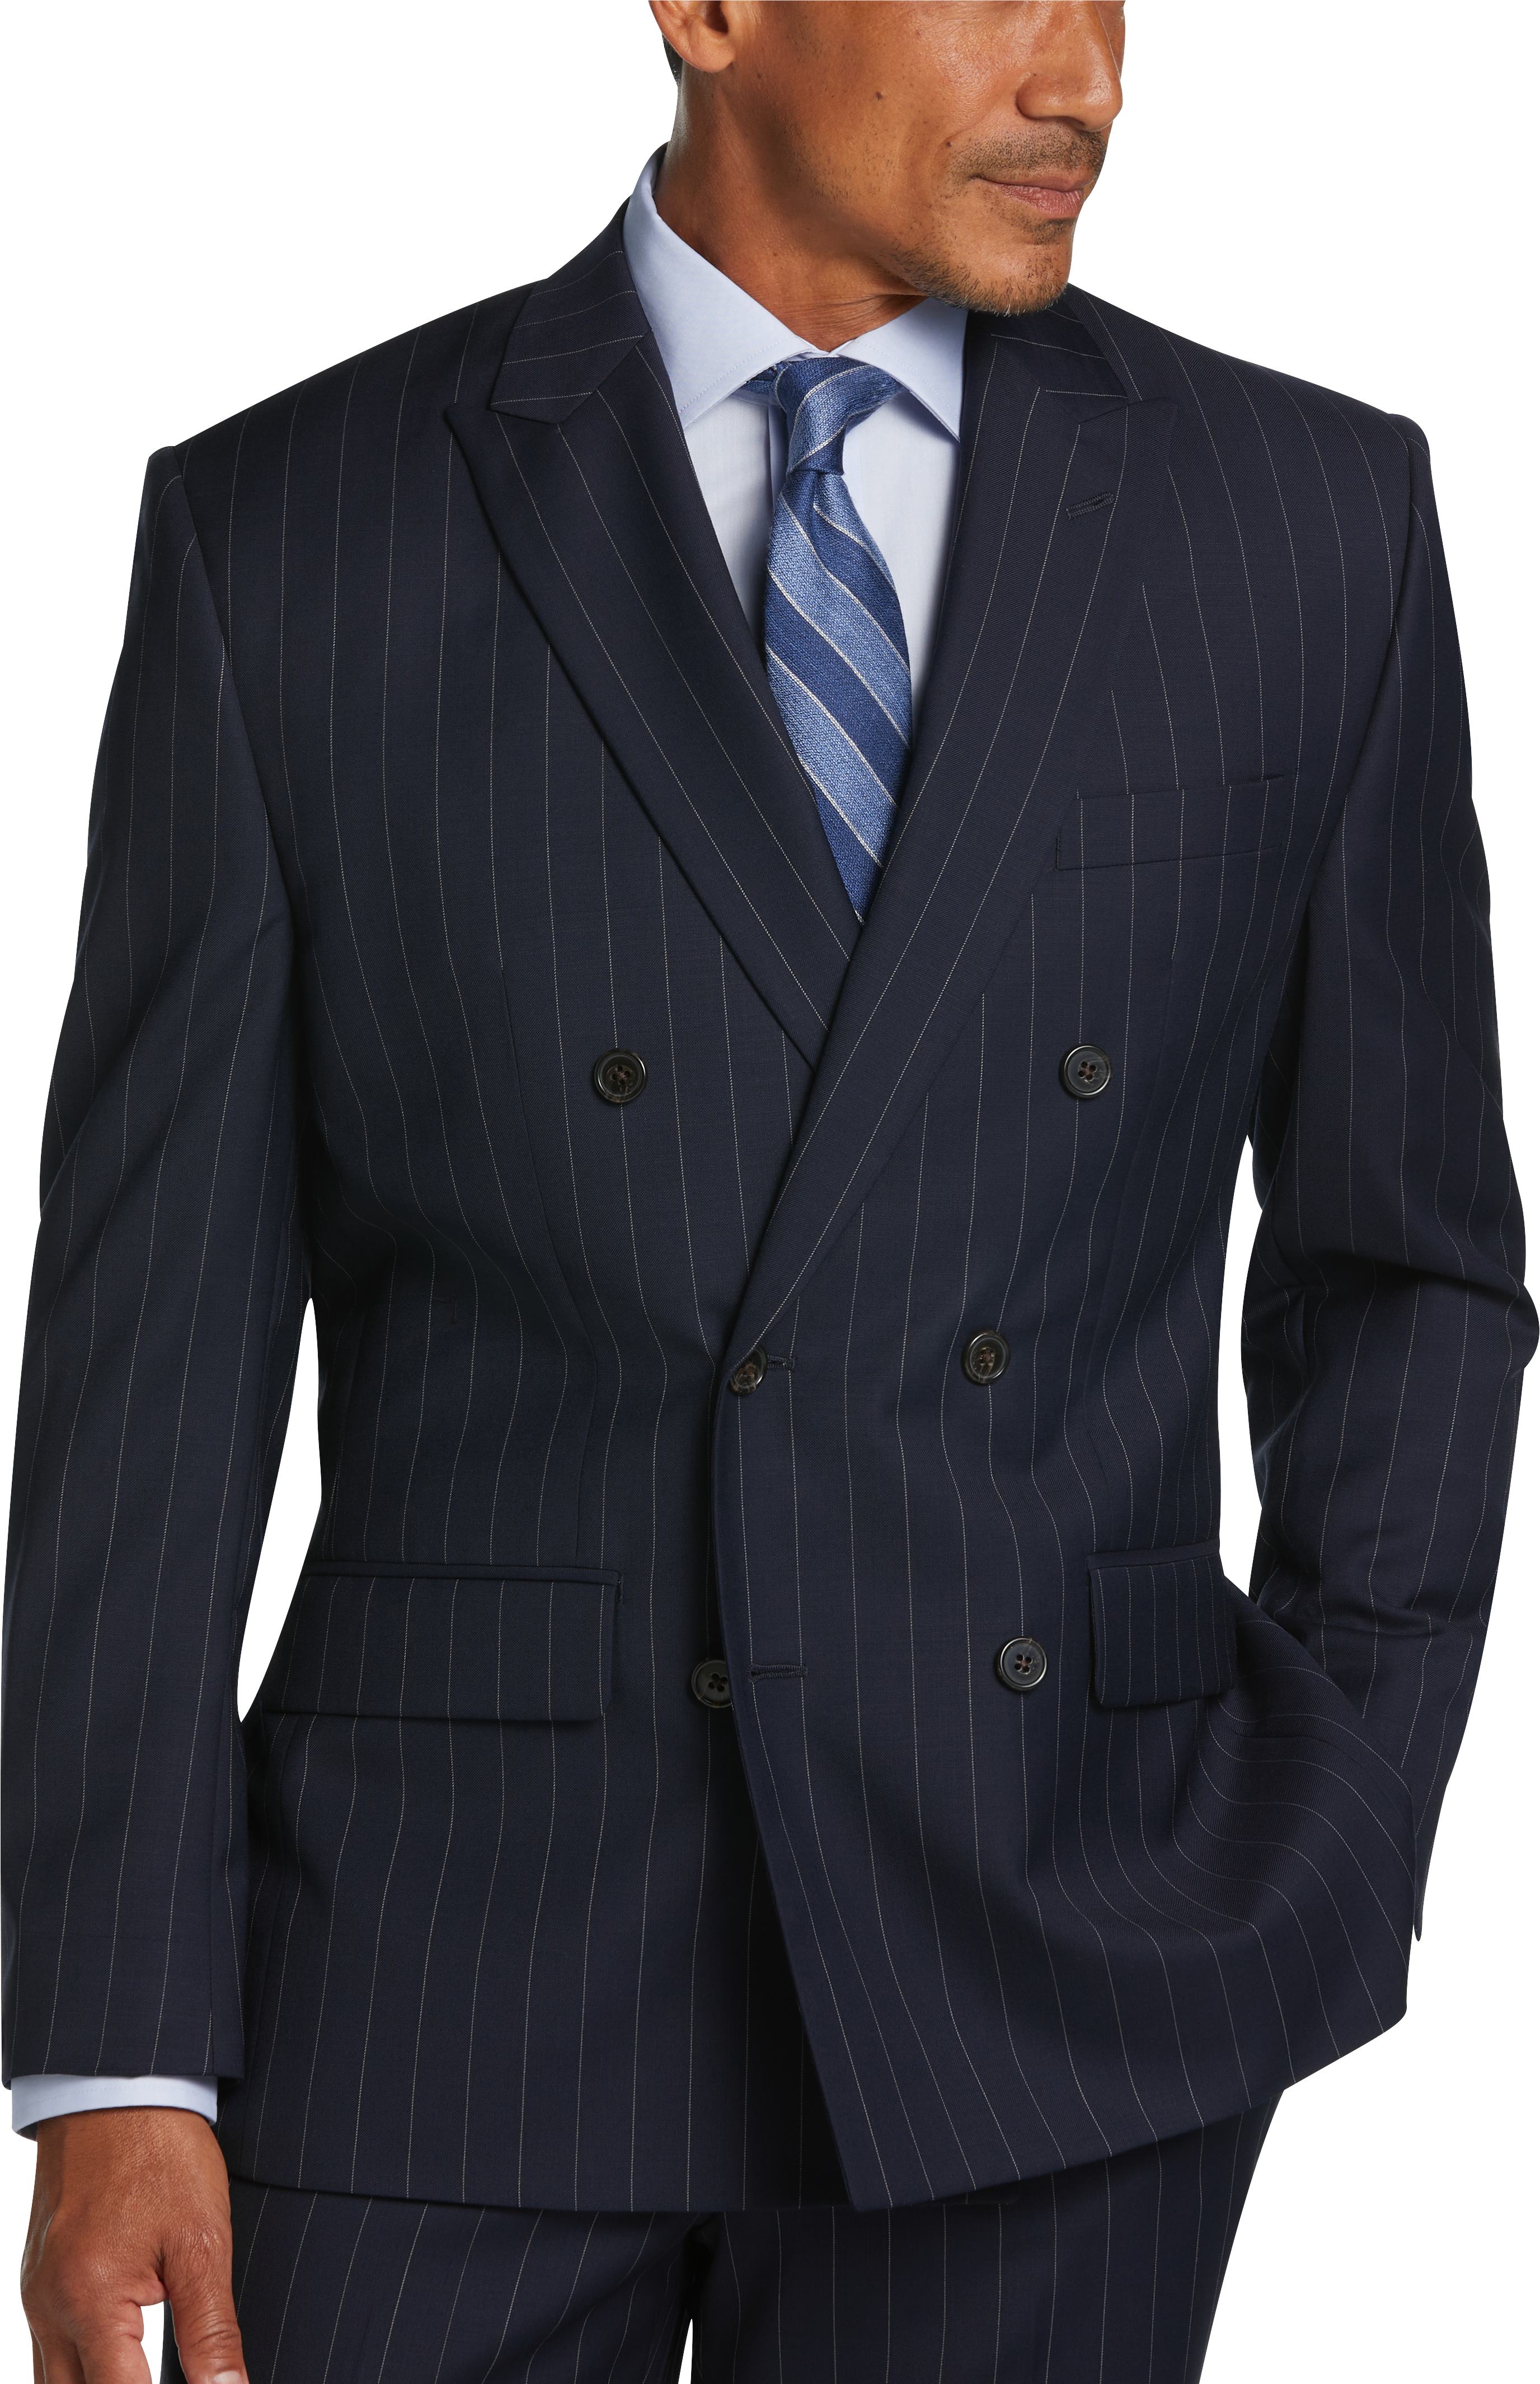 Lauren By Ralph Lauren Classic Fit Suit, Navy Stripe - Mens Suits - Men's Wearhouse